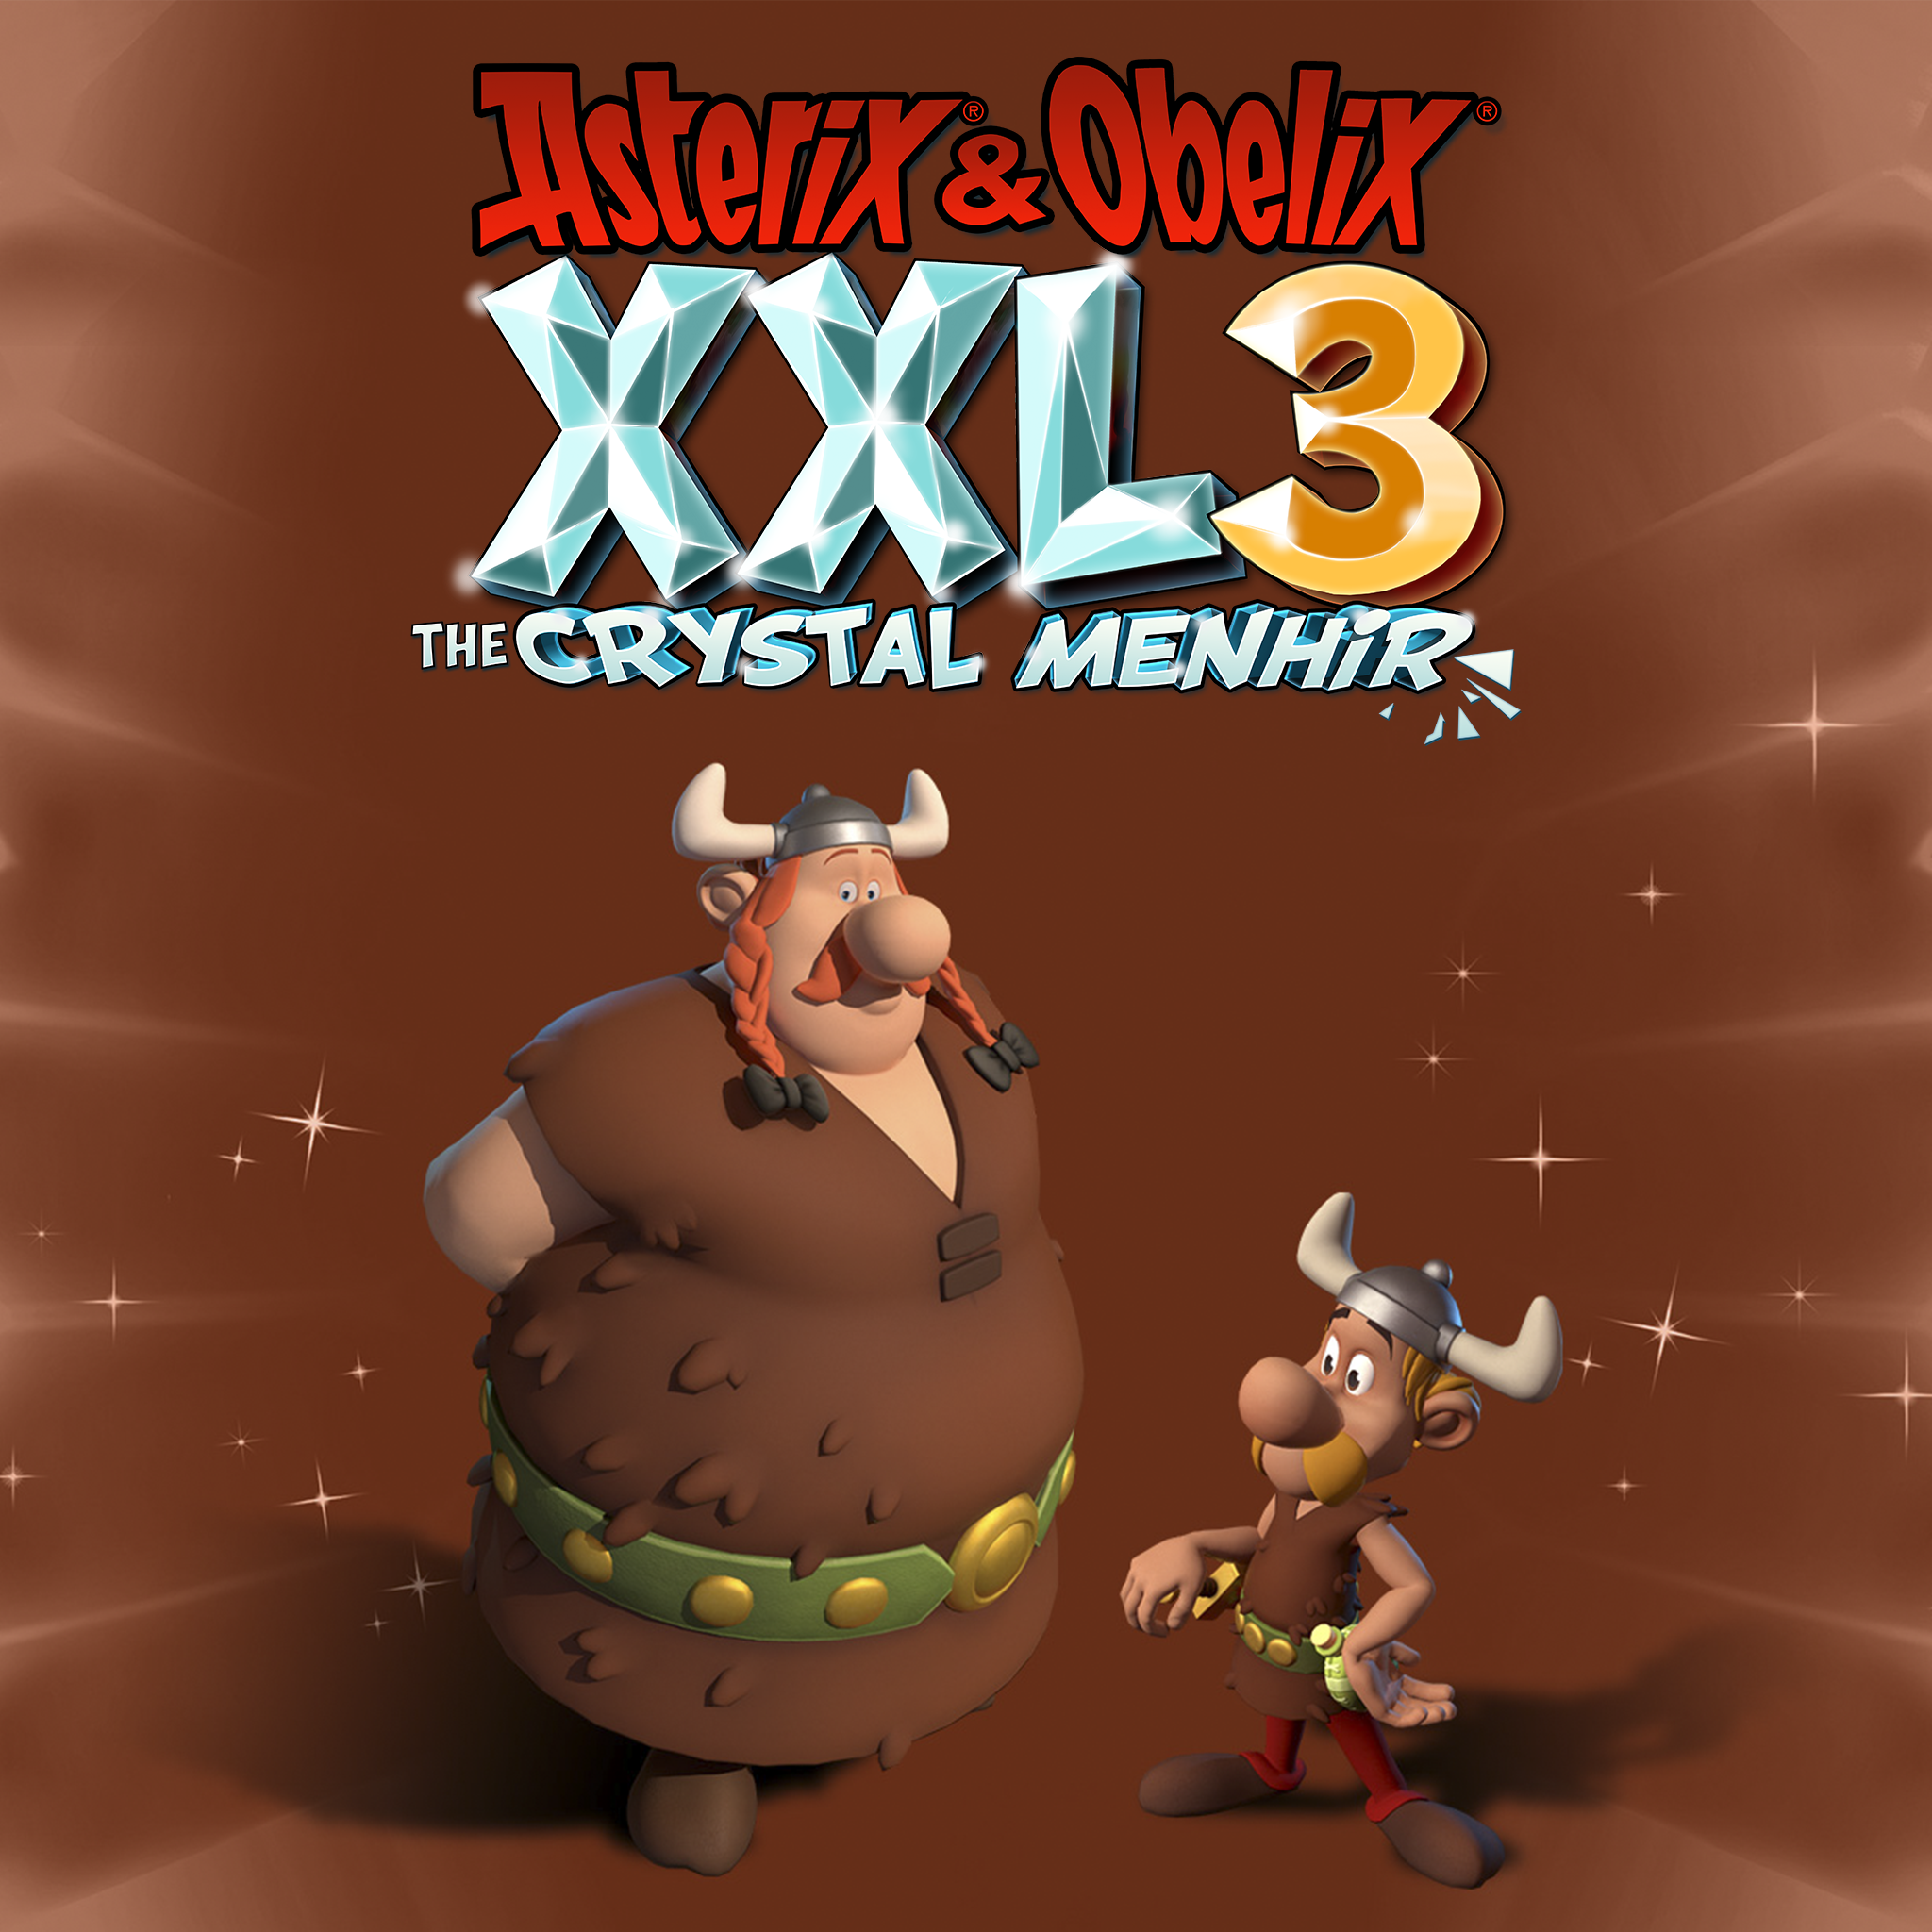 Viking Outfit - Asterix & Obelix XXL 3